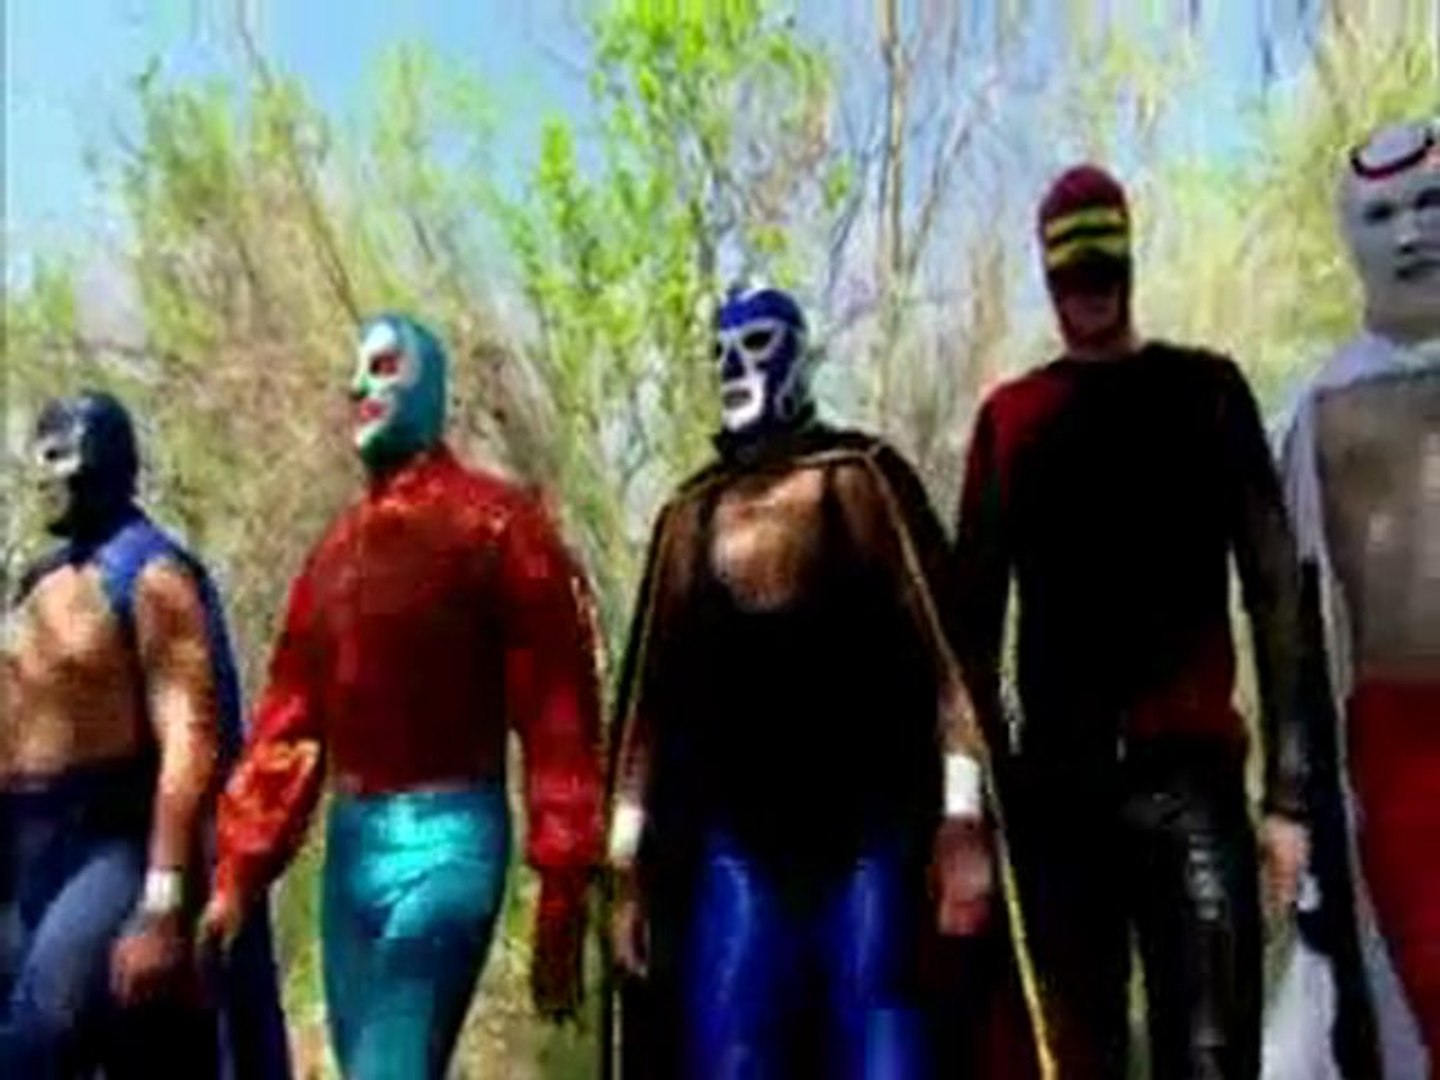 Mil Mascaras movie trailer The Aztec Mummy. - video Dailymotion